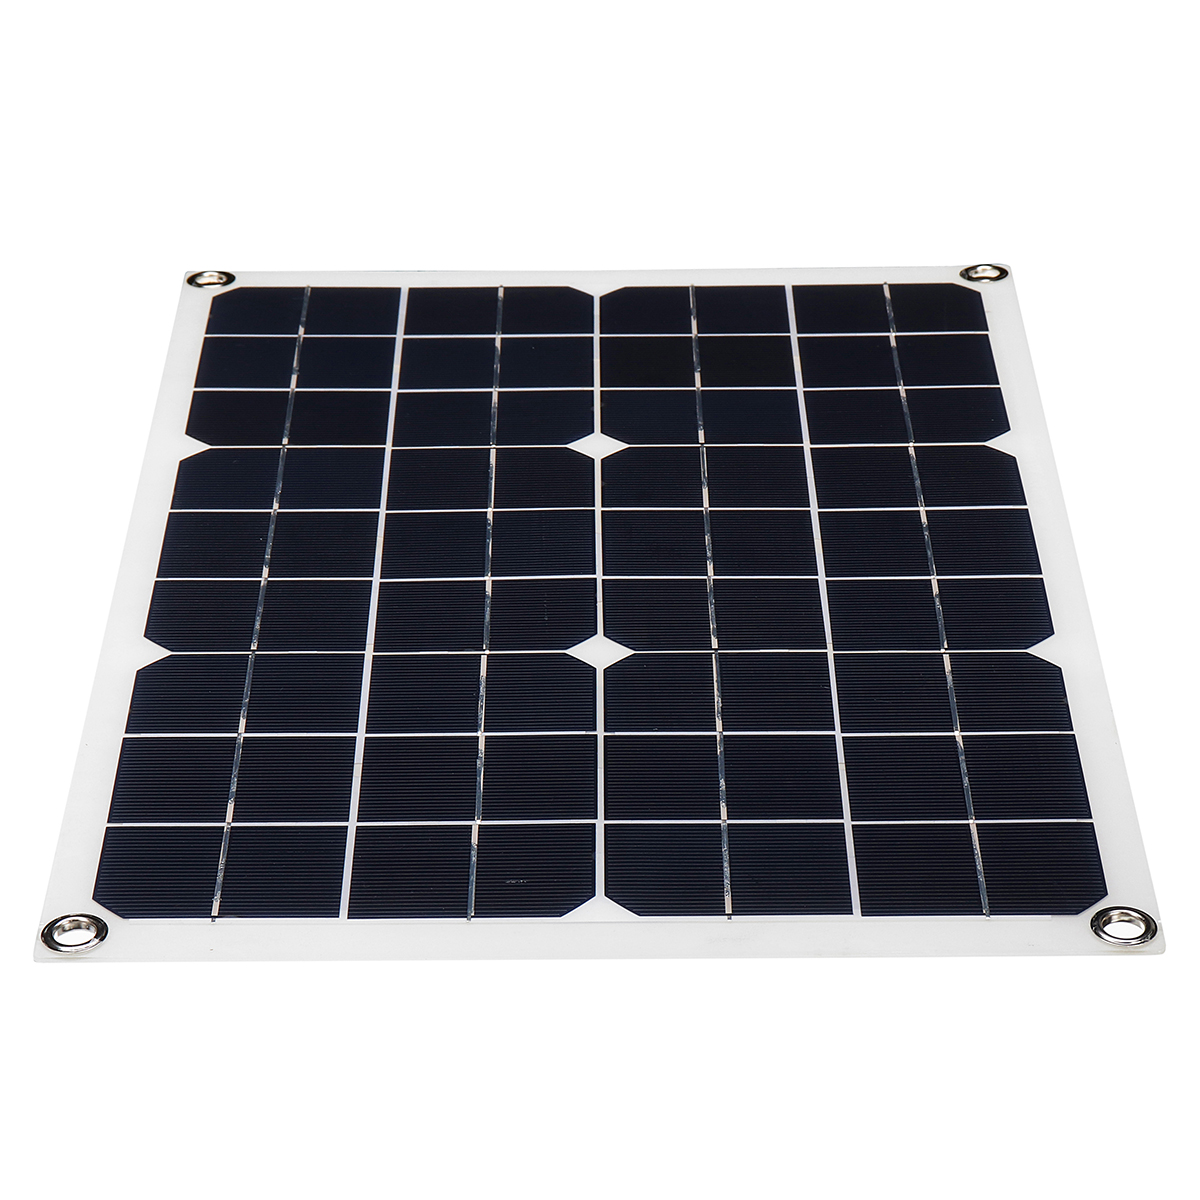 20W 430*280*2.5mm Monocrystalline Solar Panel with 18V DC Plug & 5V USB Output High Efficiency & Light Weight 4